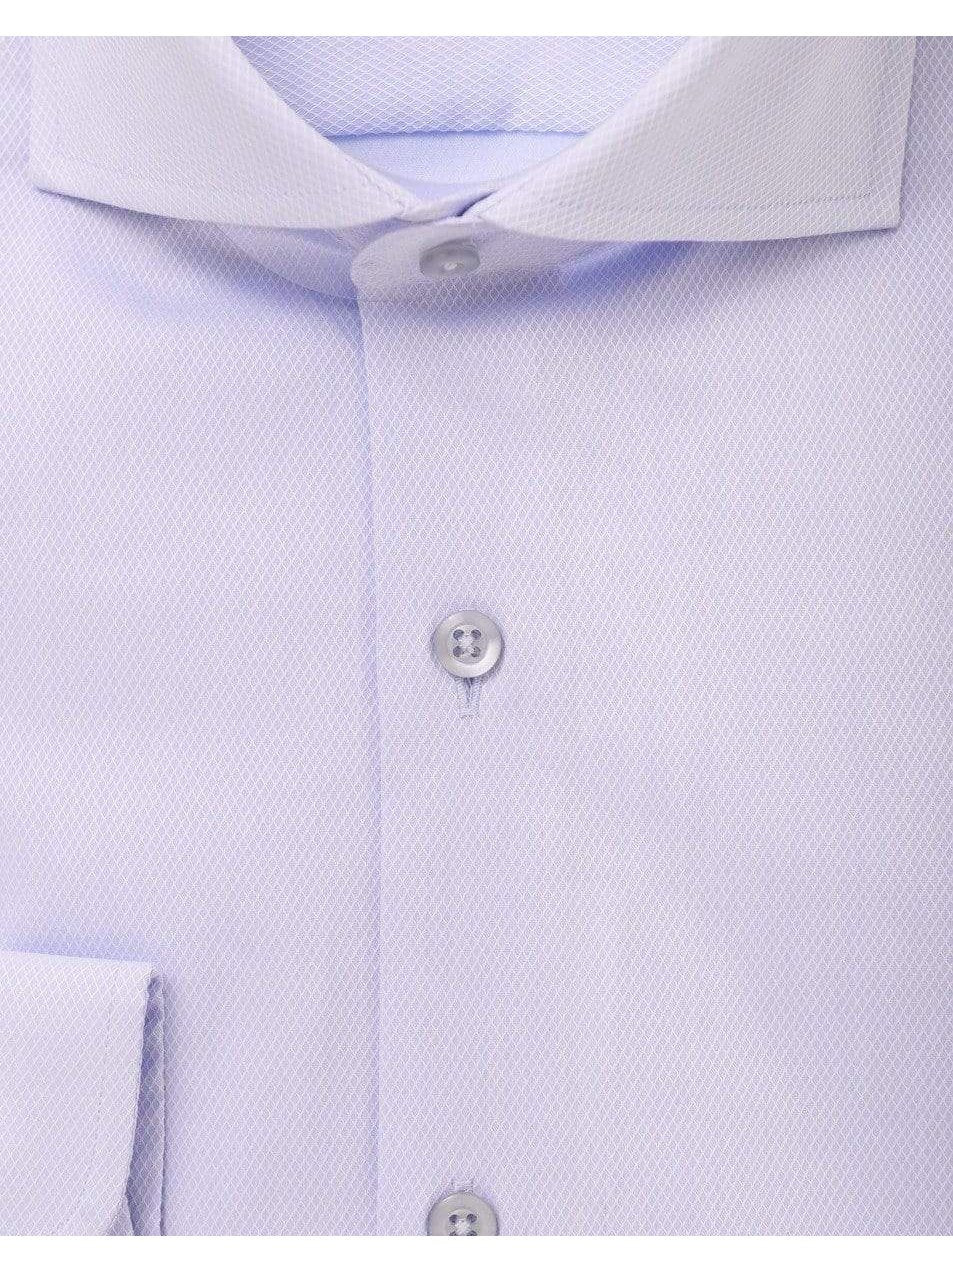 Modena SHIRTS The Suit Depot Men?s Cotton Solid Blue Slim Fit Stretch Dress Shirt